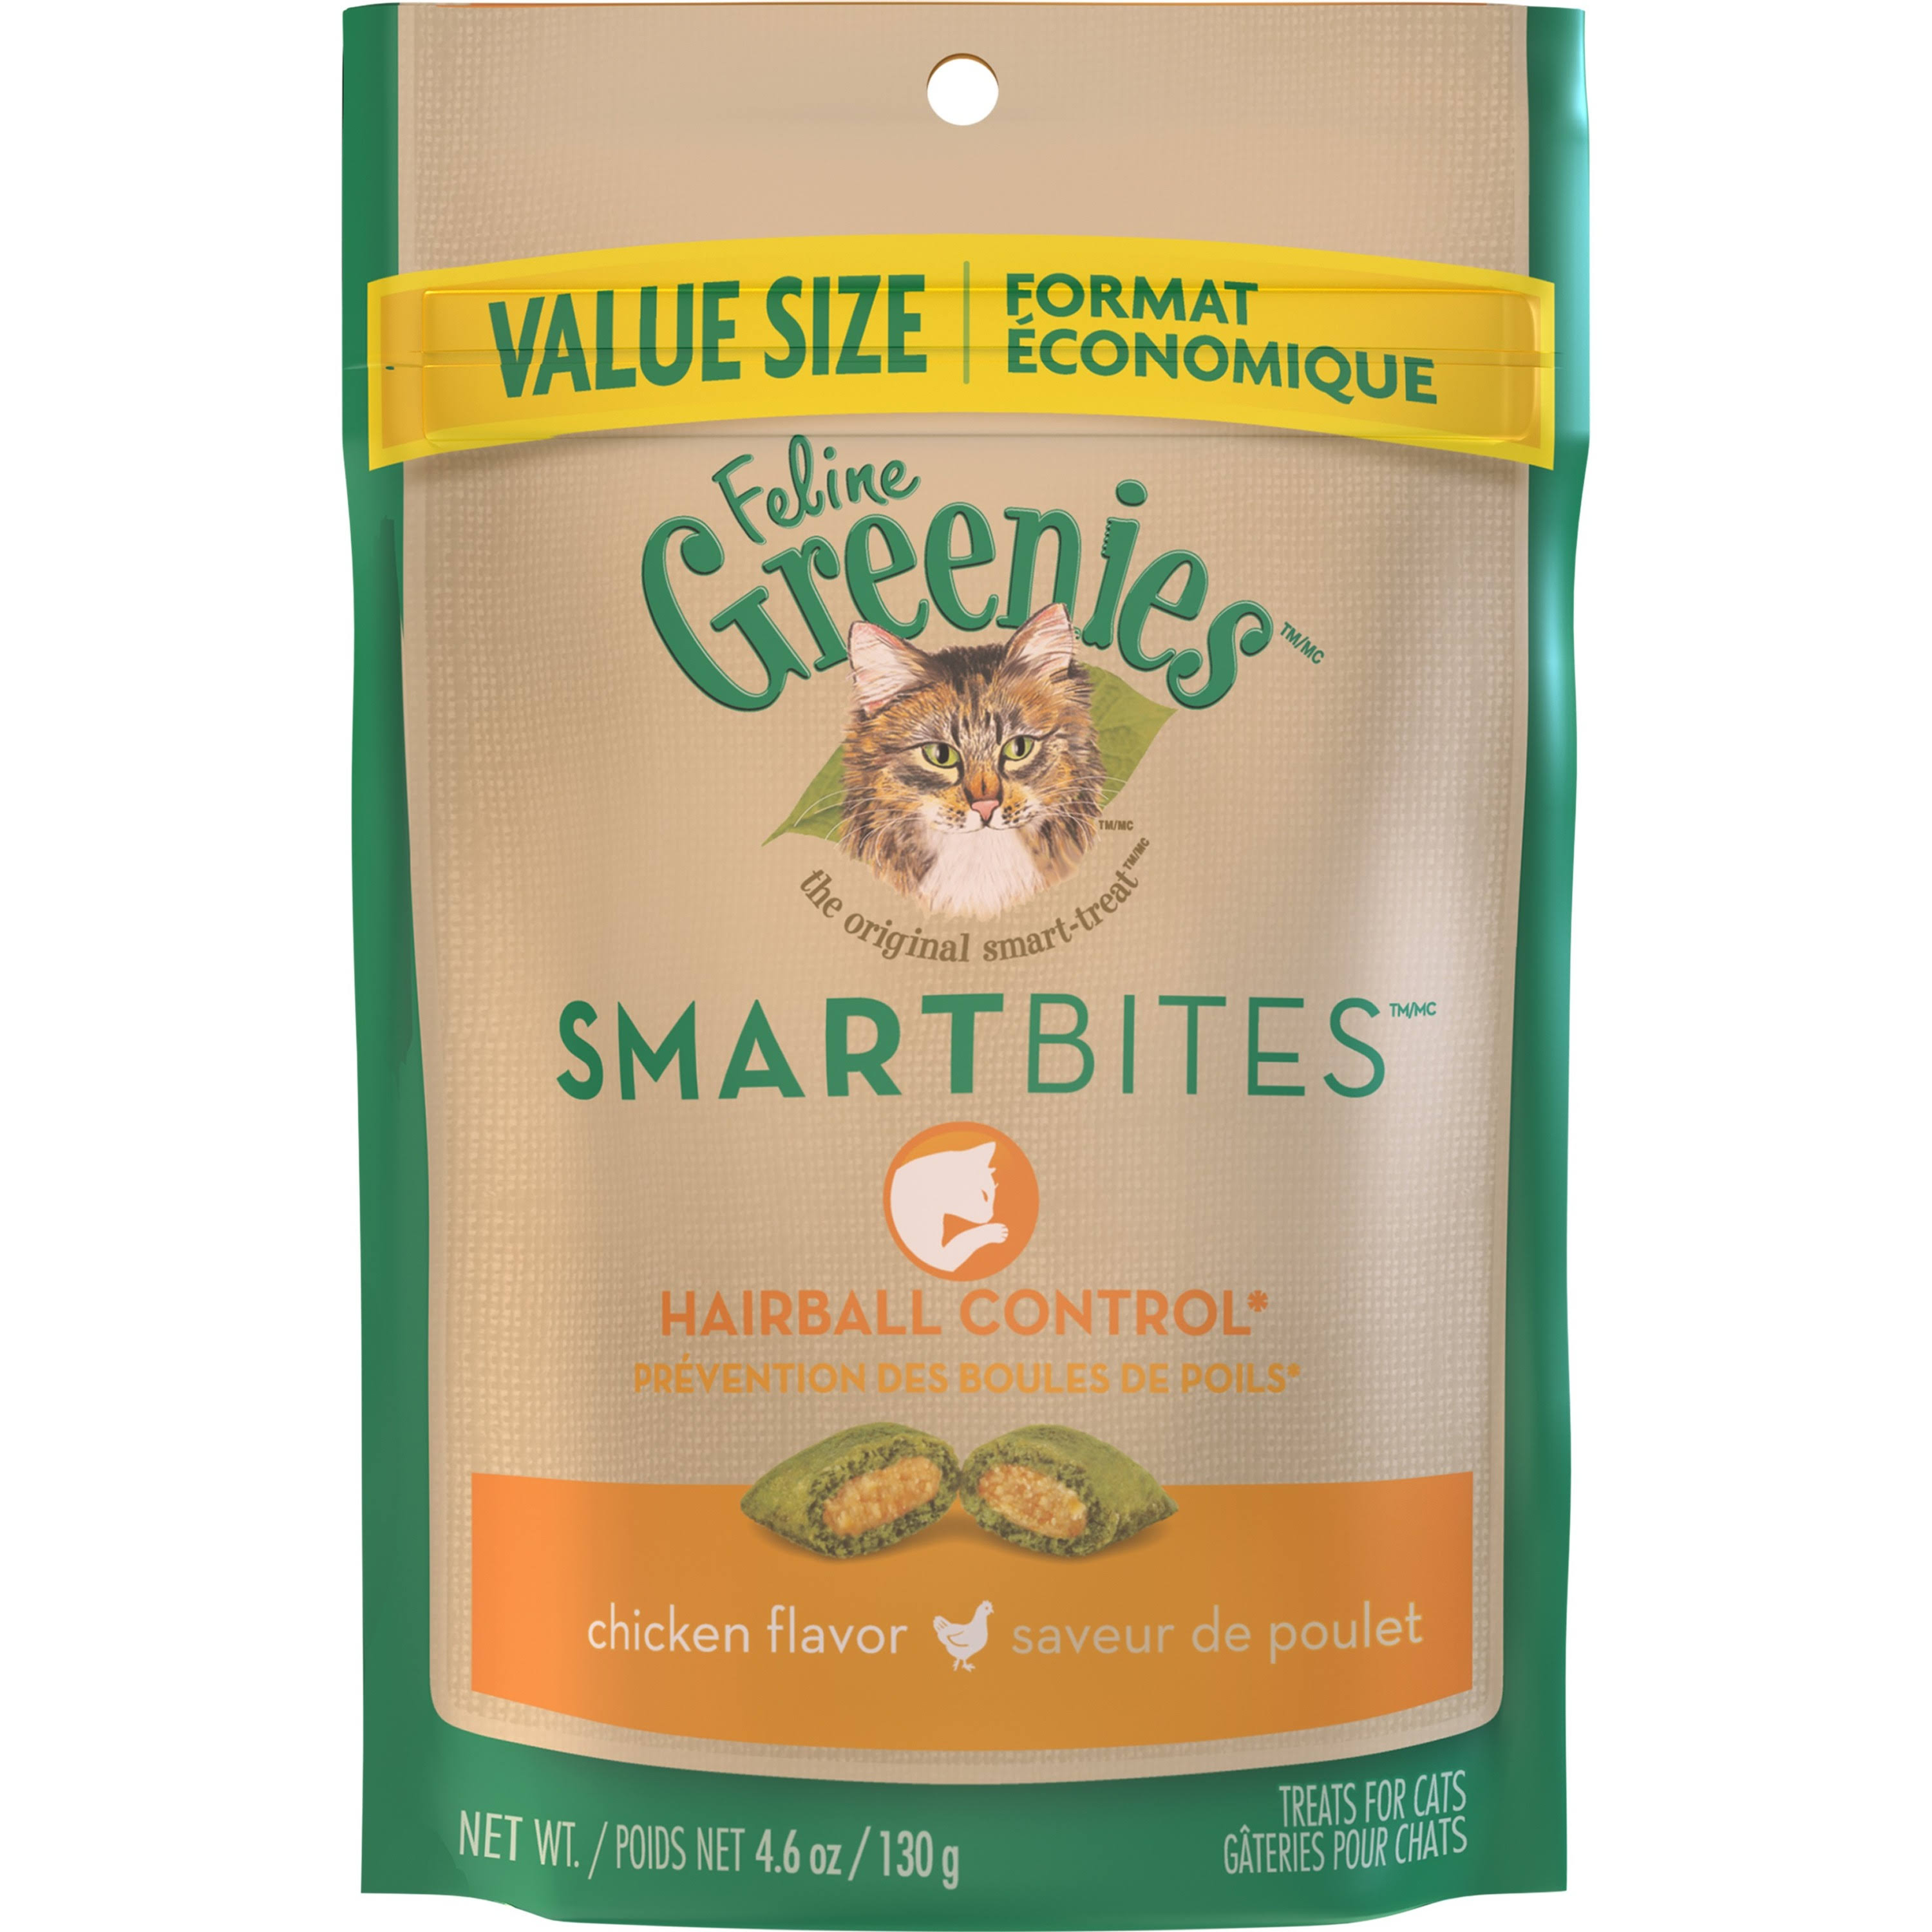 Greenies SmartBites Hairball Control Cat Treats - Chicken Flavor, 4.6oz